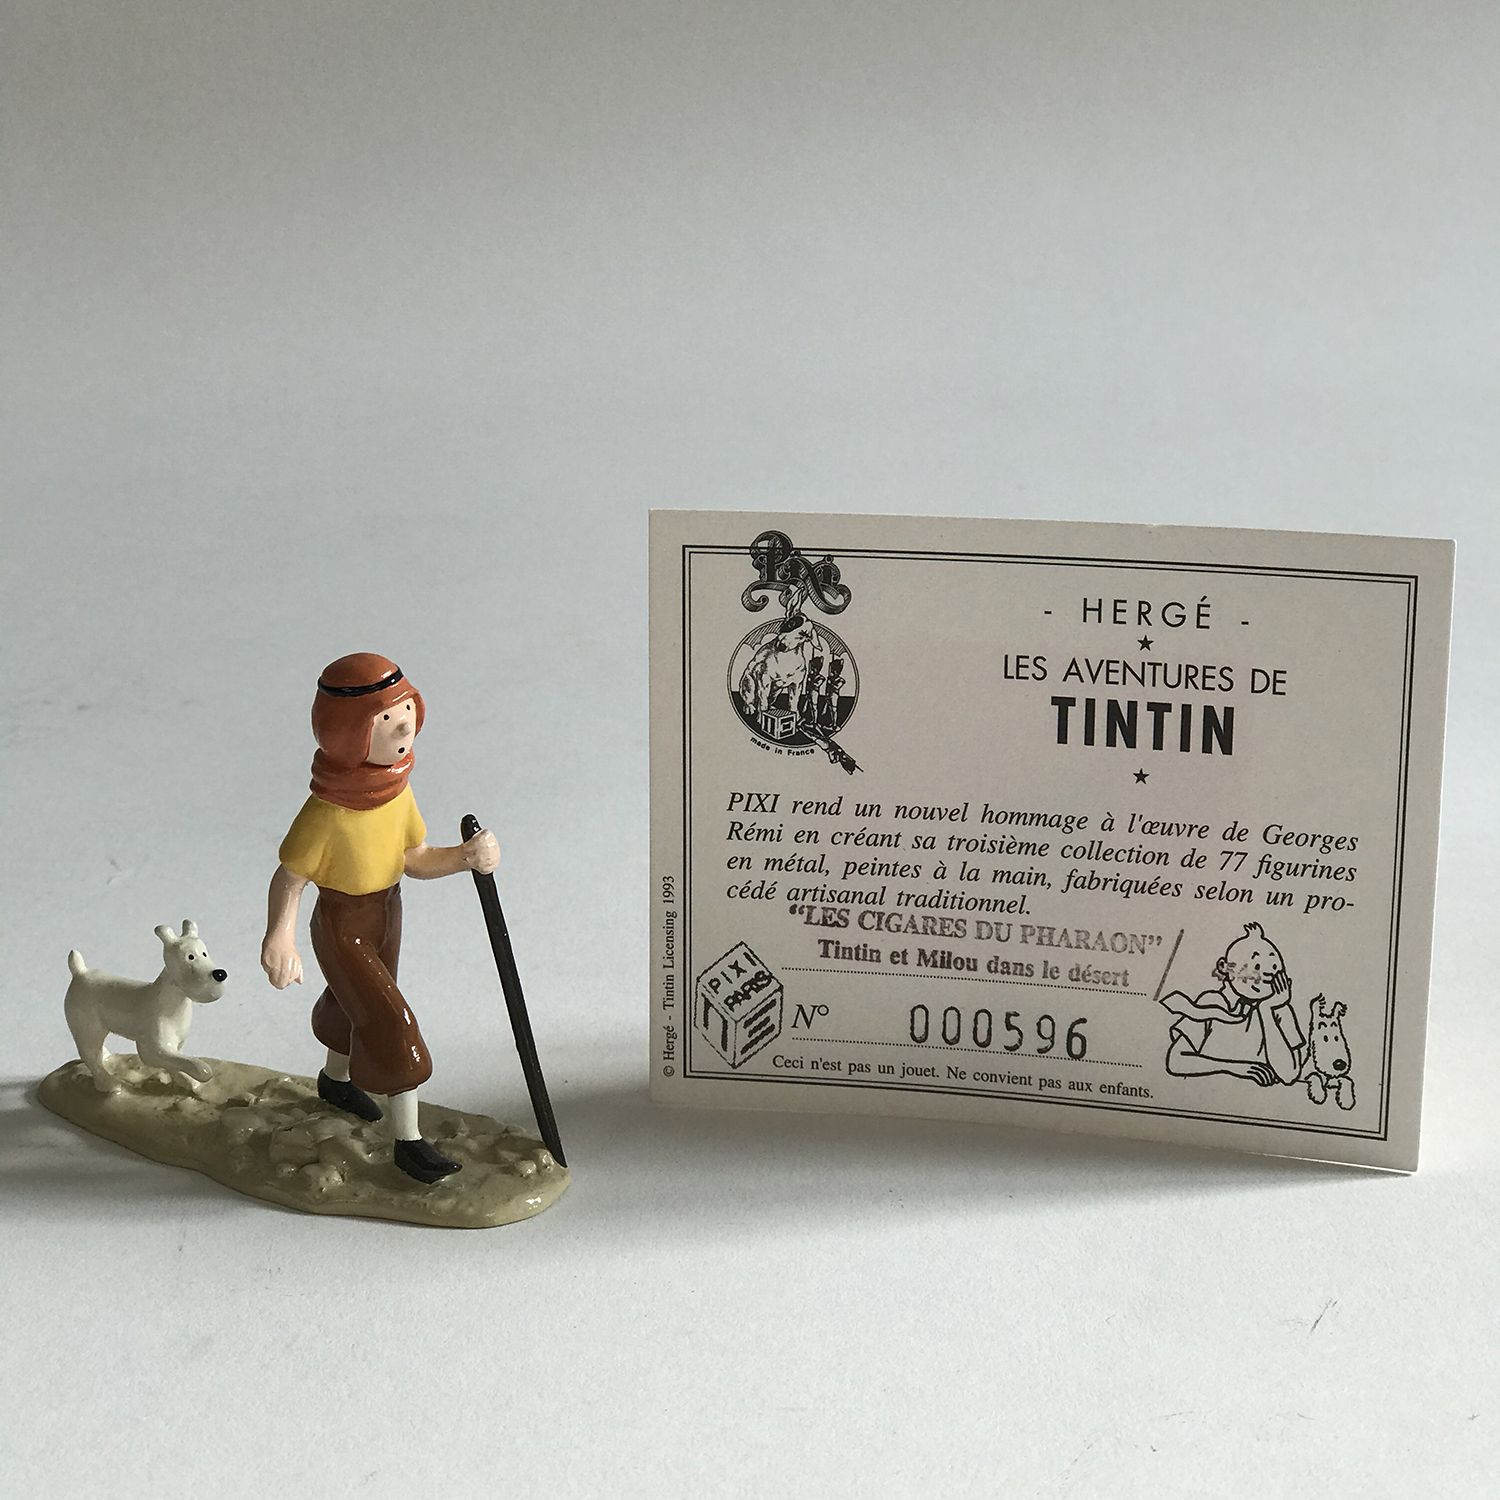 Null HERGÉ (Georges RÉMI) (1907-1983) Tintin - PIXI " Les Cigares du Pharaon : T&hellip;